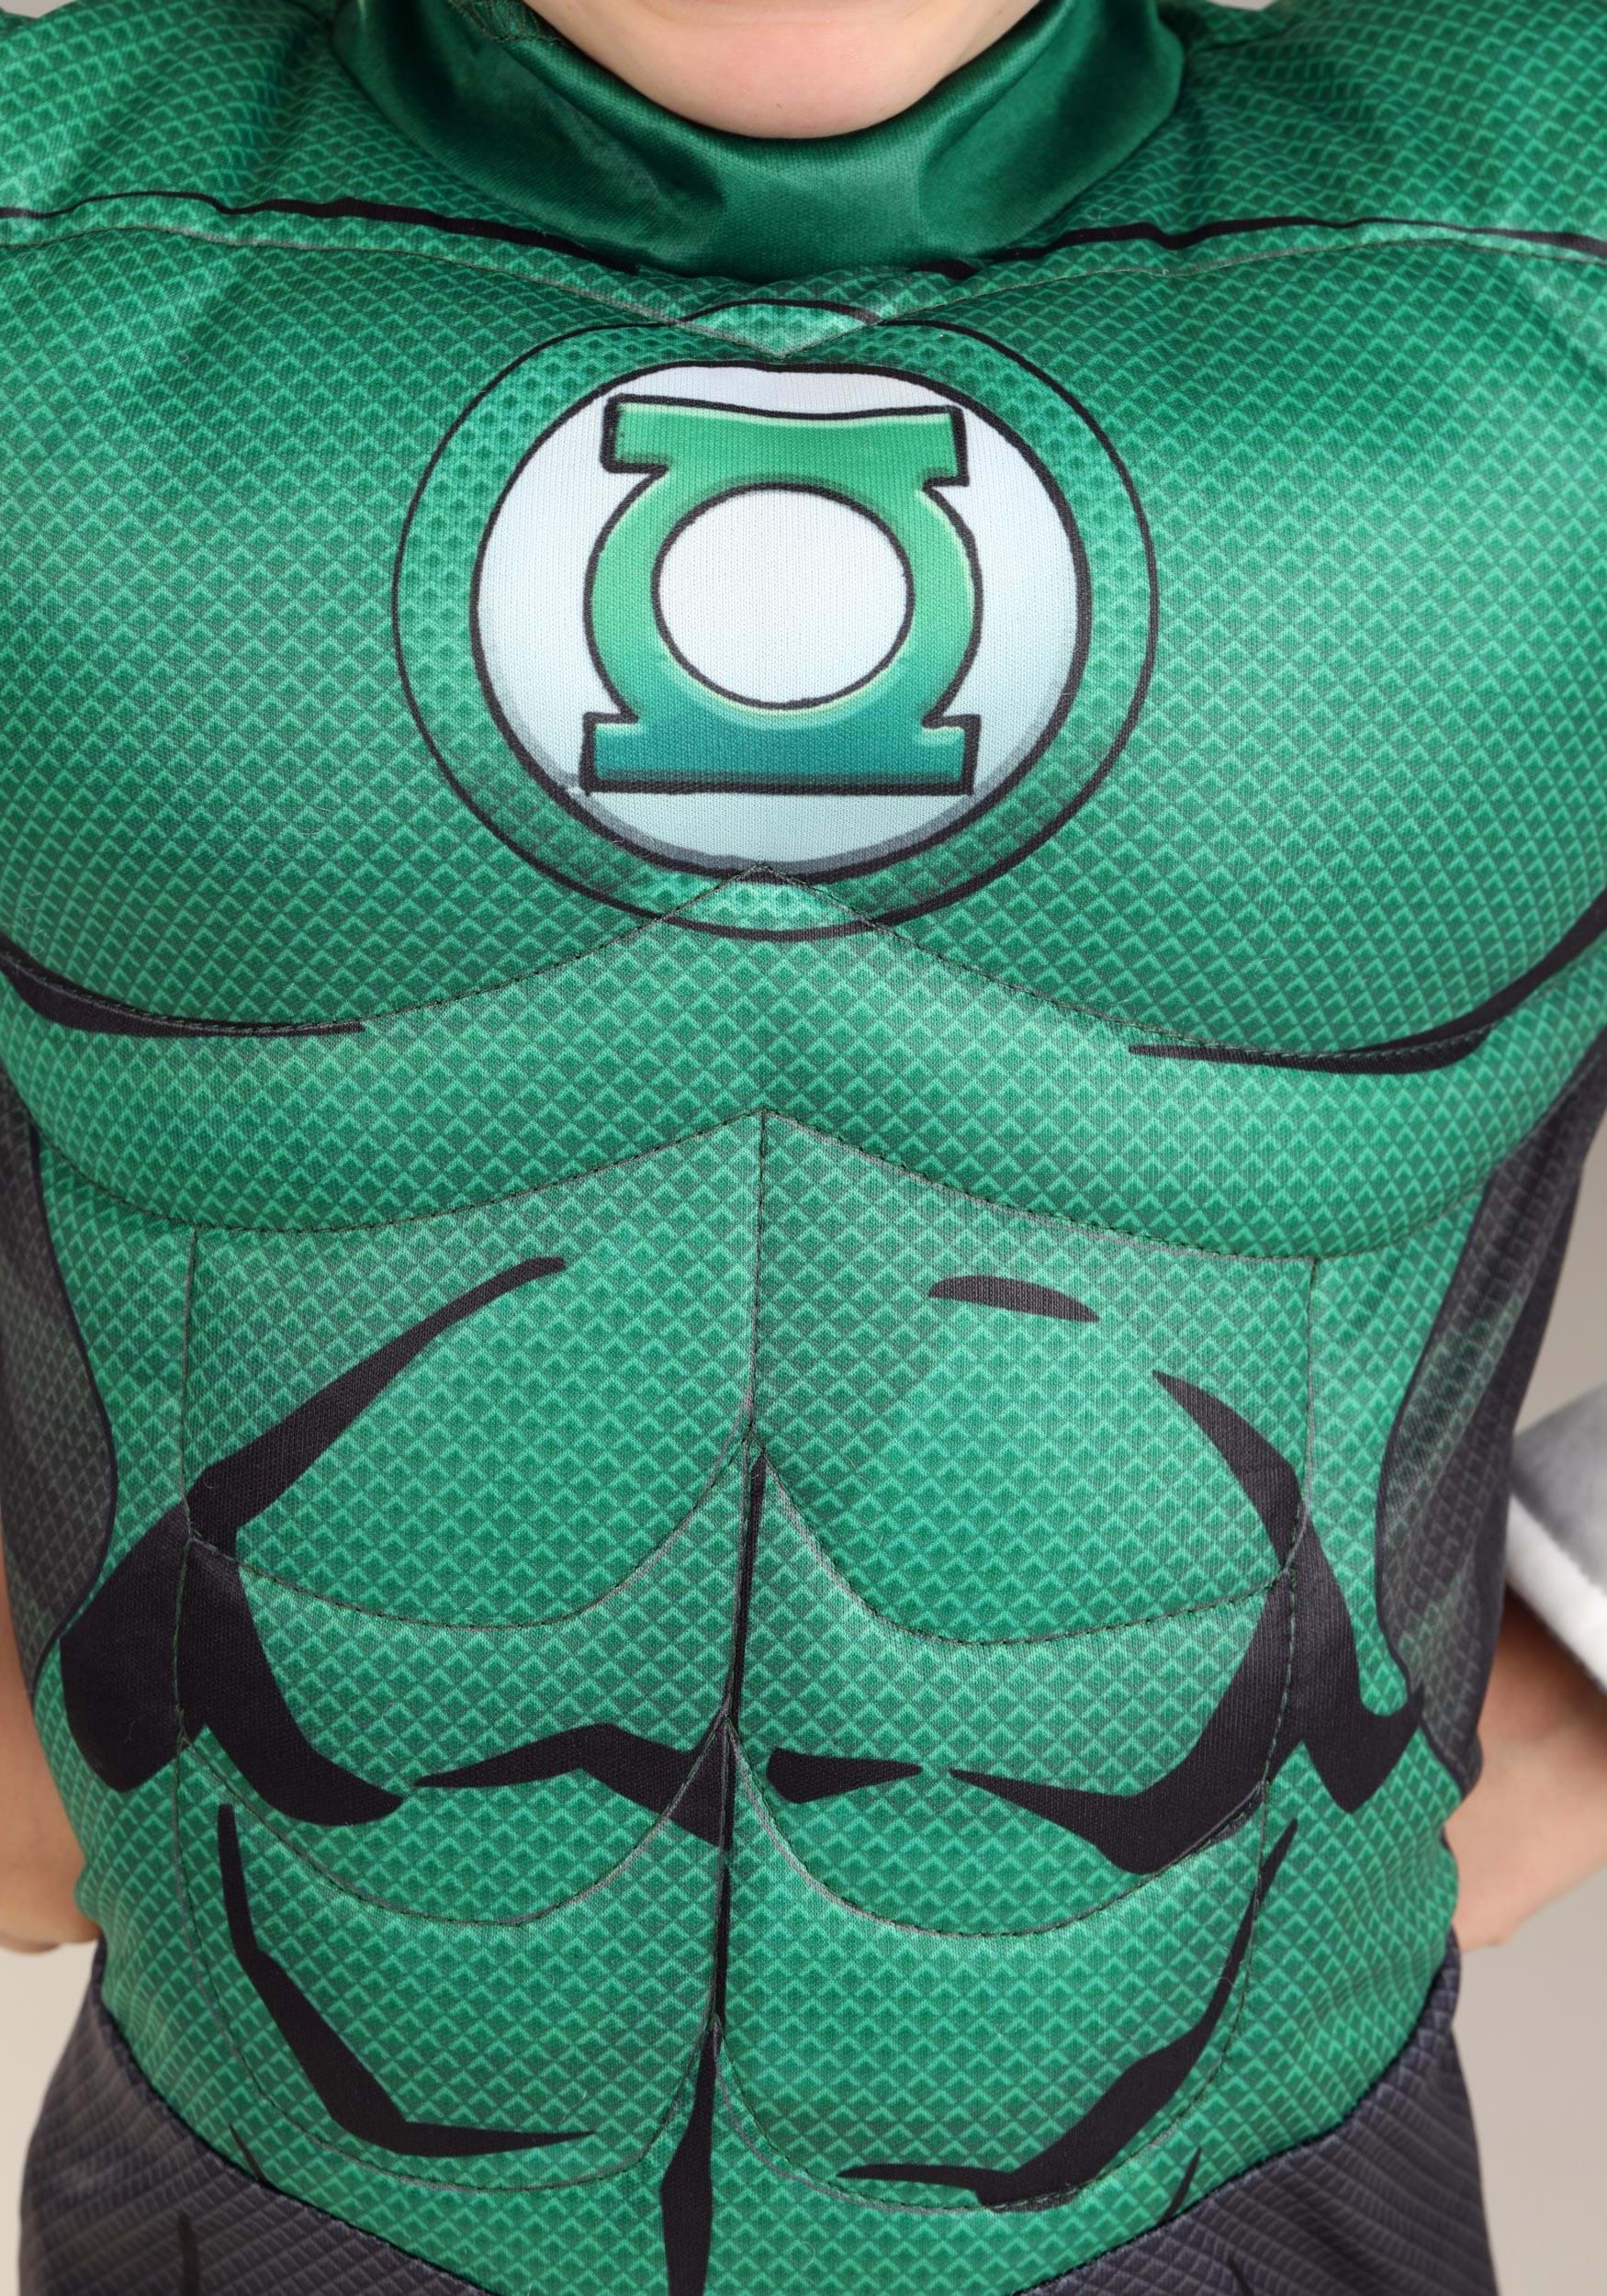 Deluxe Toddler Green Lantern Costume